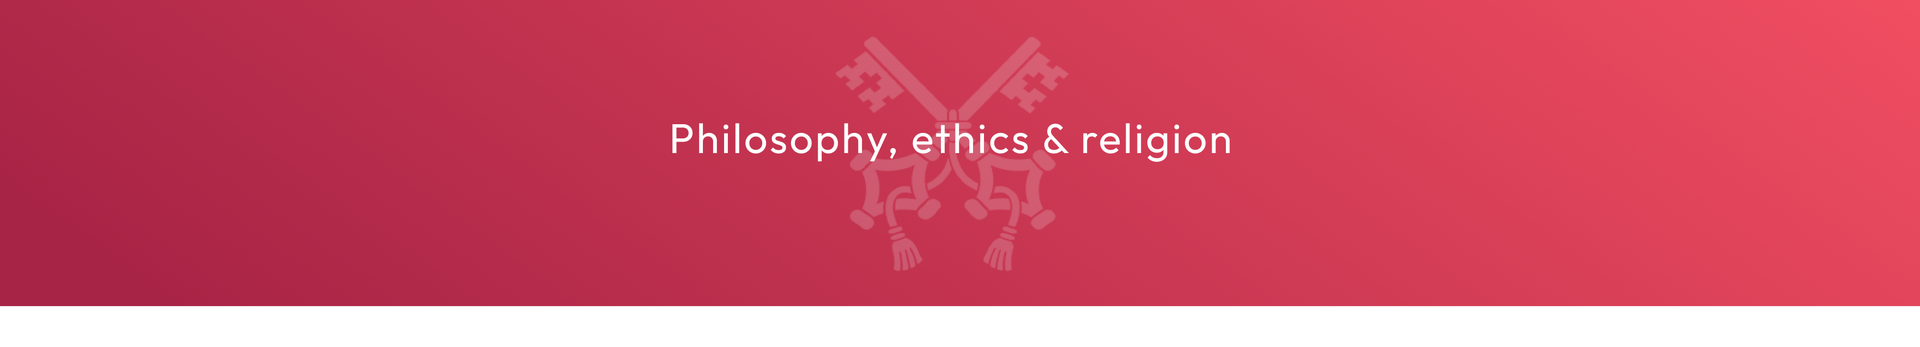 Philosophy ethics and religion